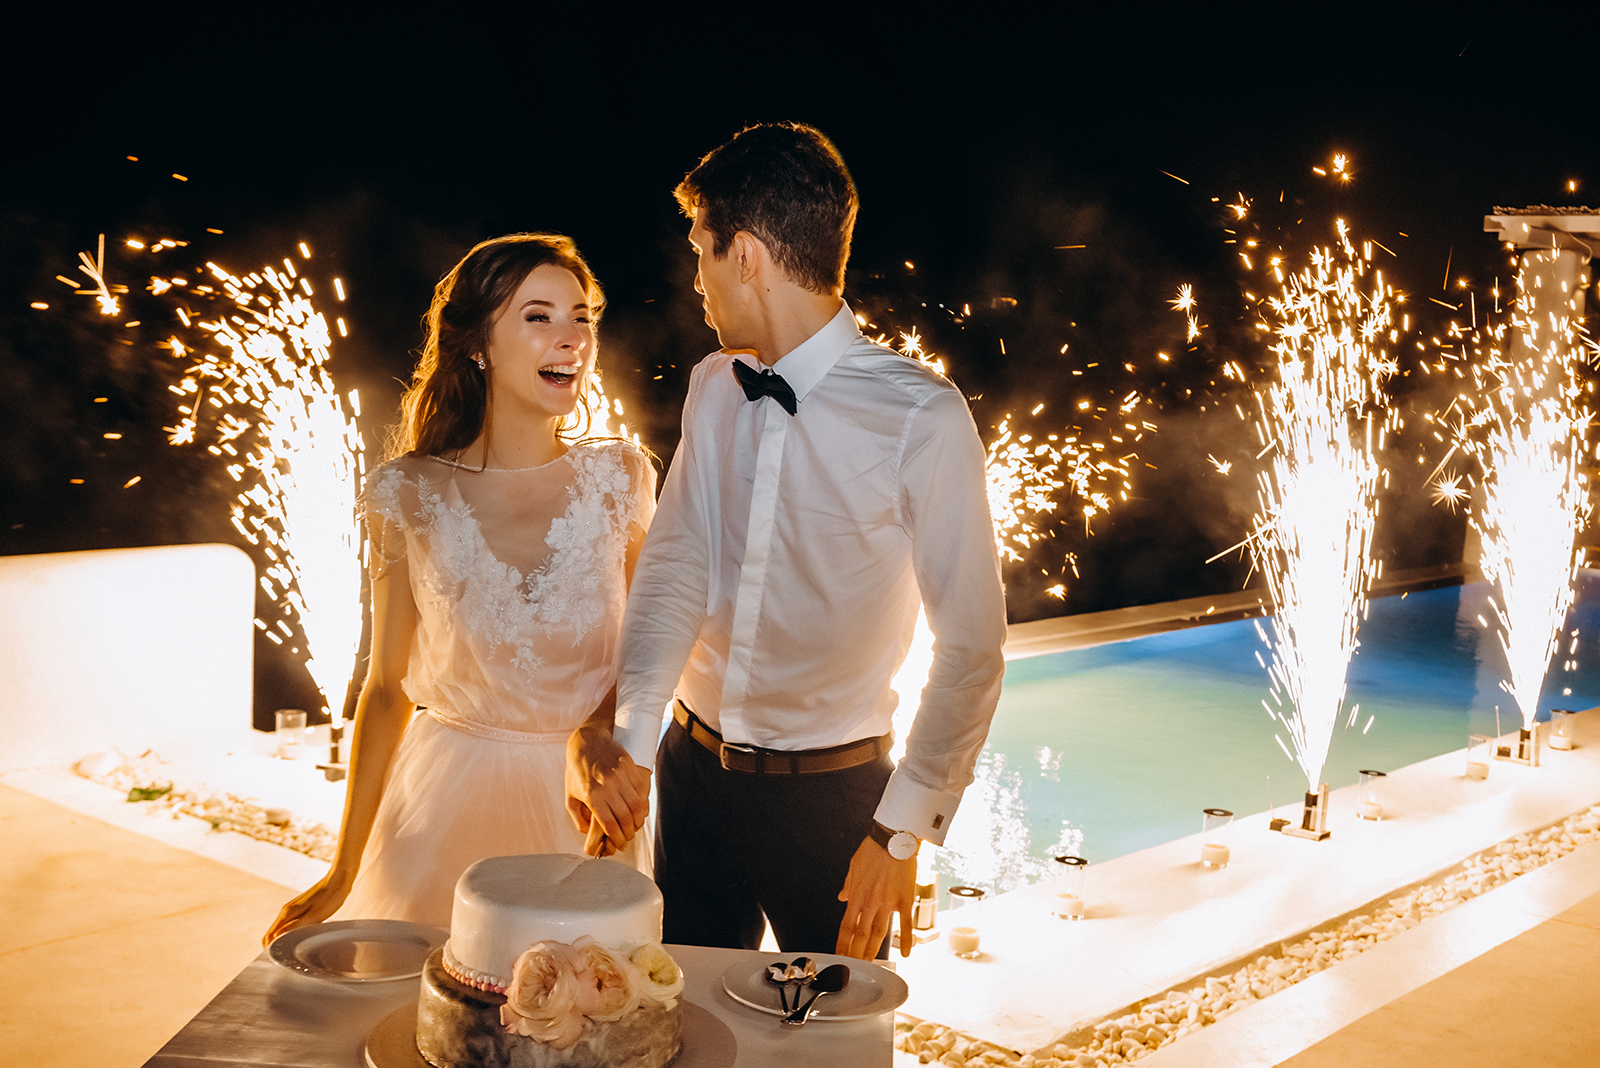 Wedding fireworks. Top wedding services on the Santorini island in Greece: свадьба на санторини, свадебное агентство Julia Veselova - Фото 2